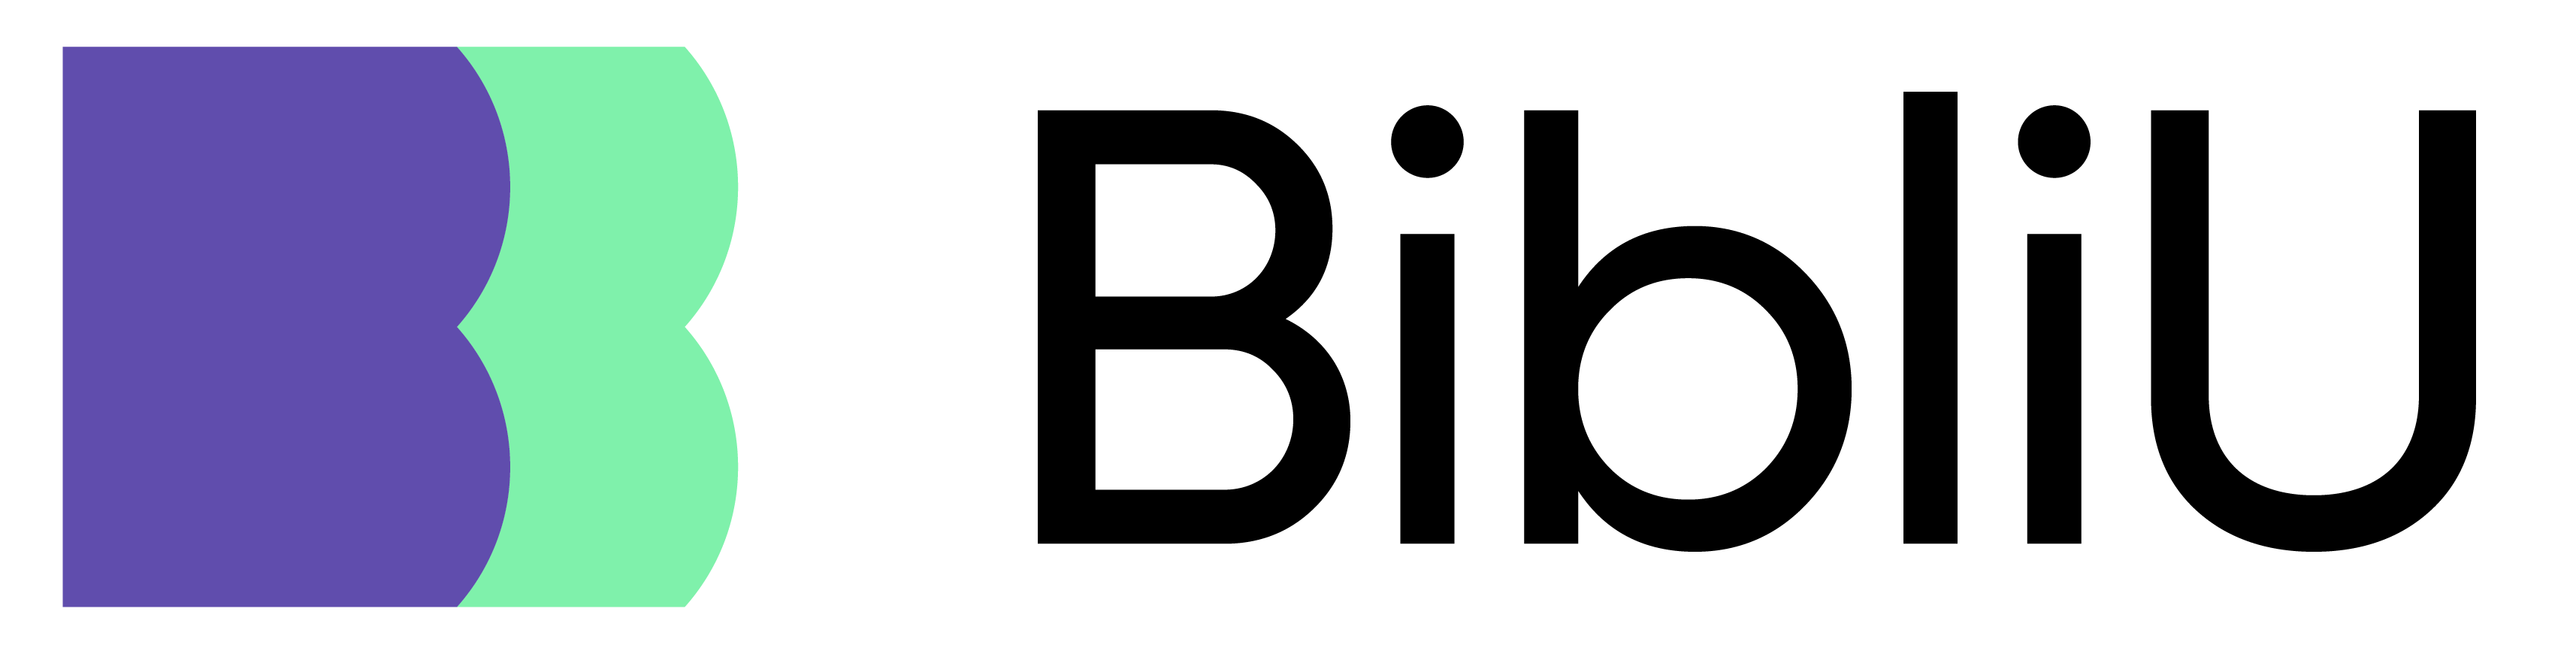 A - Official BibliU Logo - Long